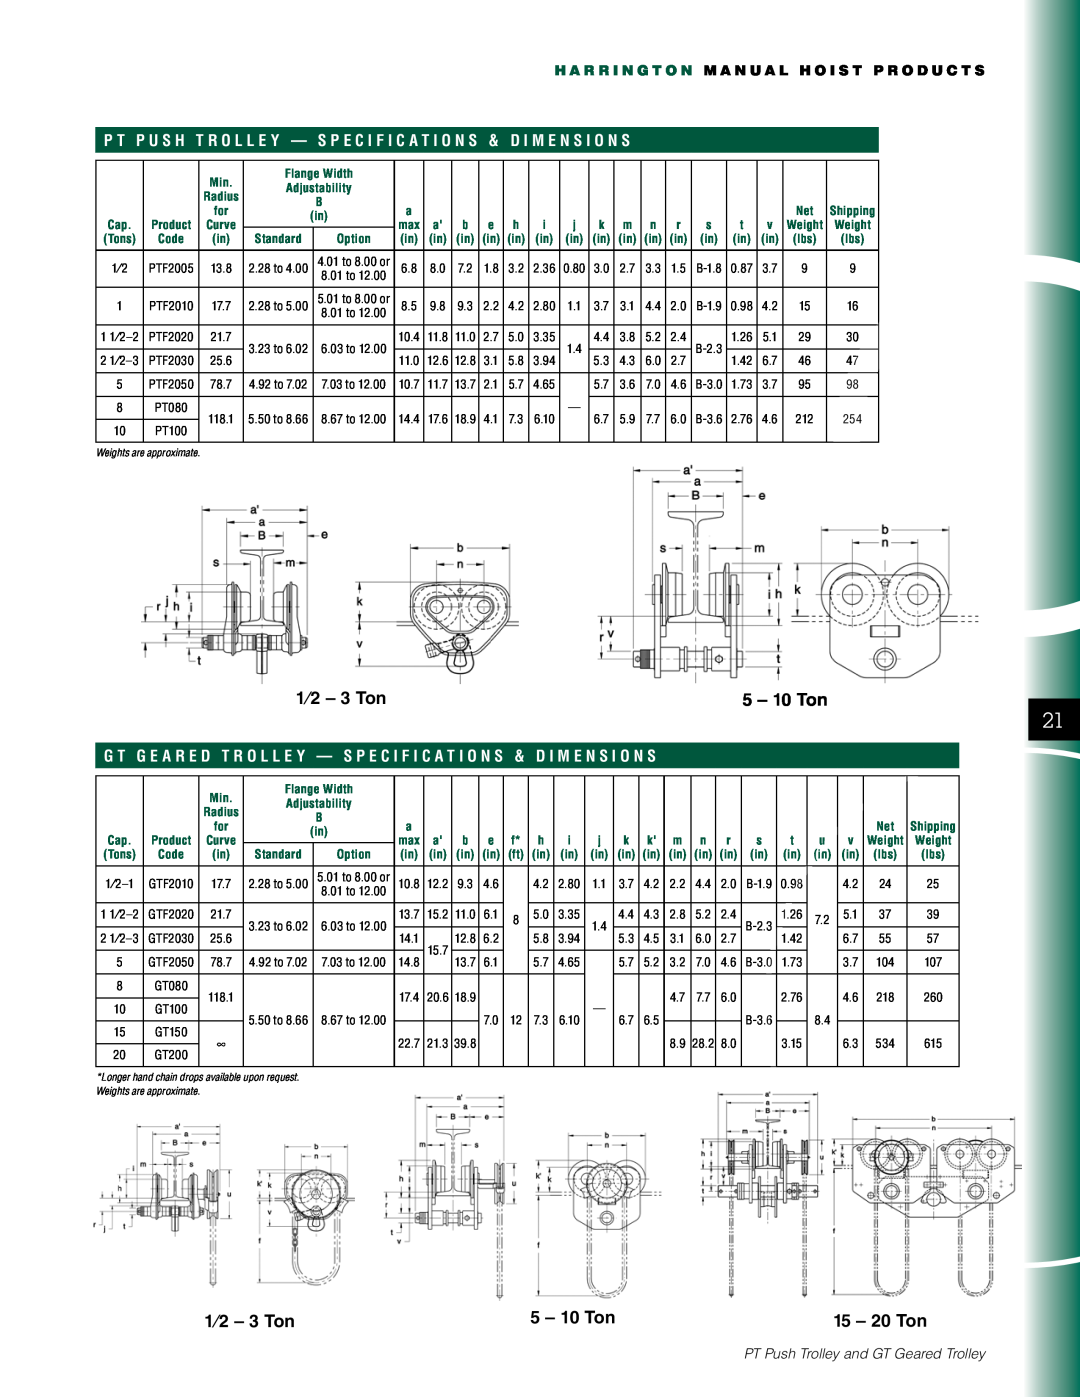 Harrington Hoists GT Geared Trolley, PT Push Trolley manual 1⁄2 - 3 Ton, 5 - 10 Ton, 15 - 20 Ton 